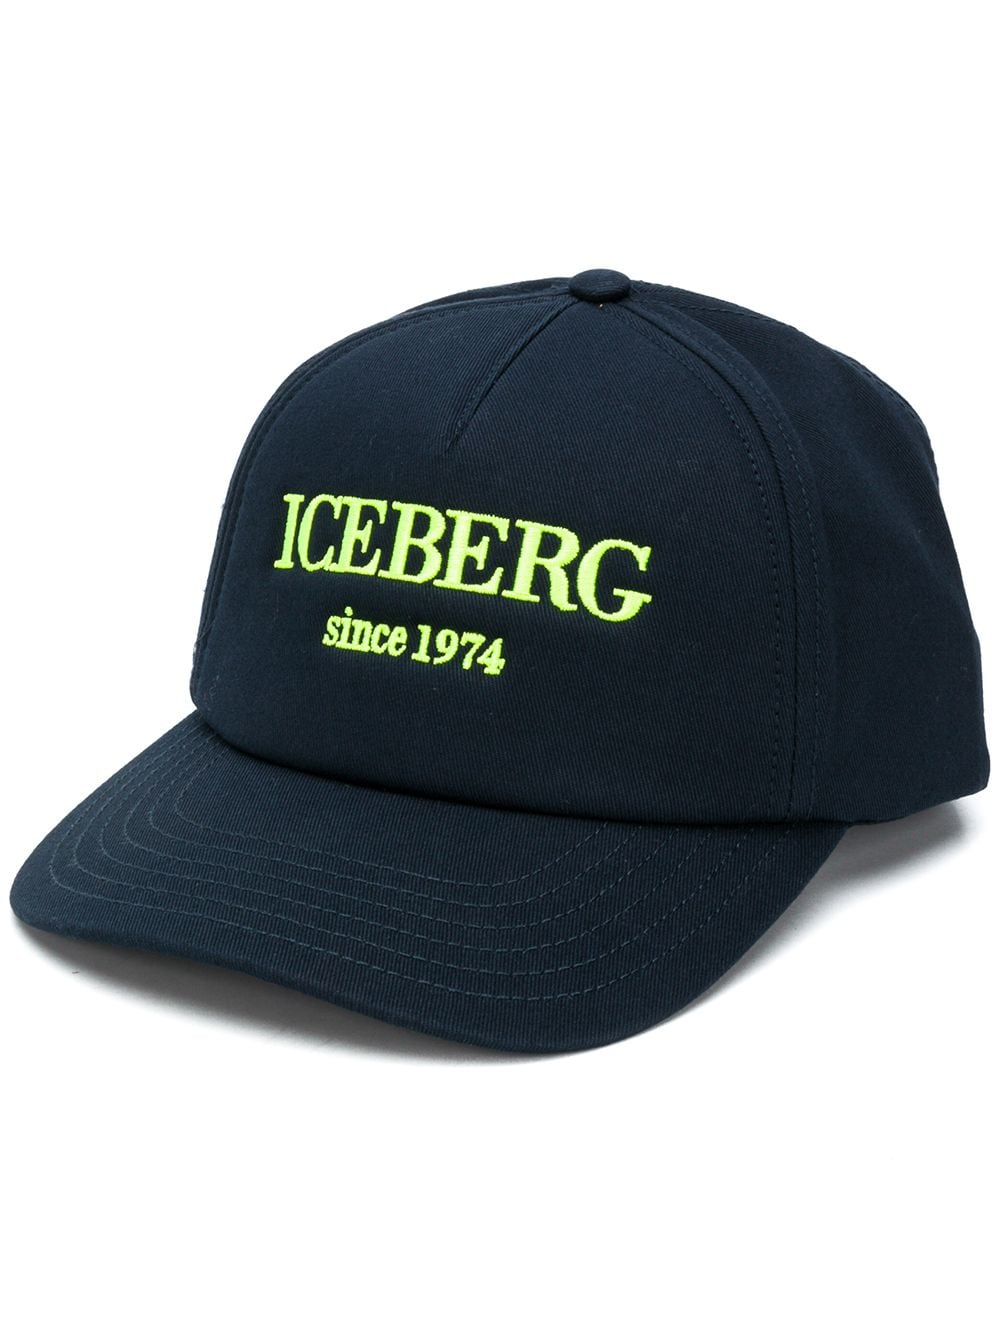 фото Iceberg бейсболка с вышитым логотипом